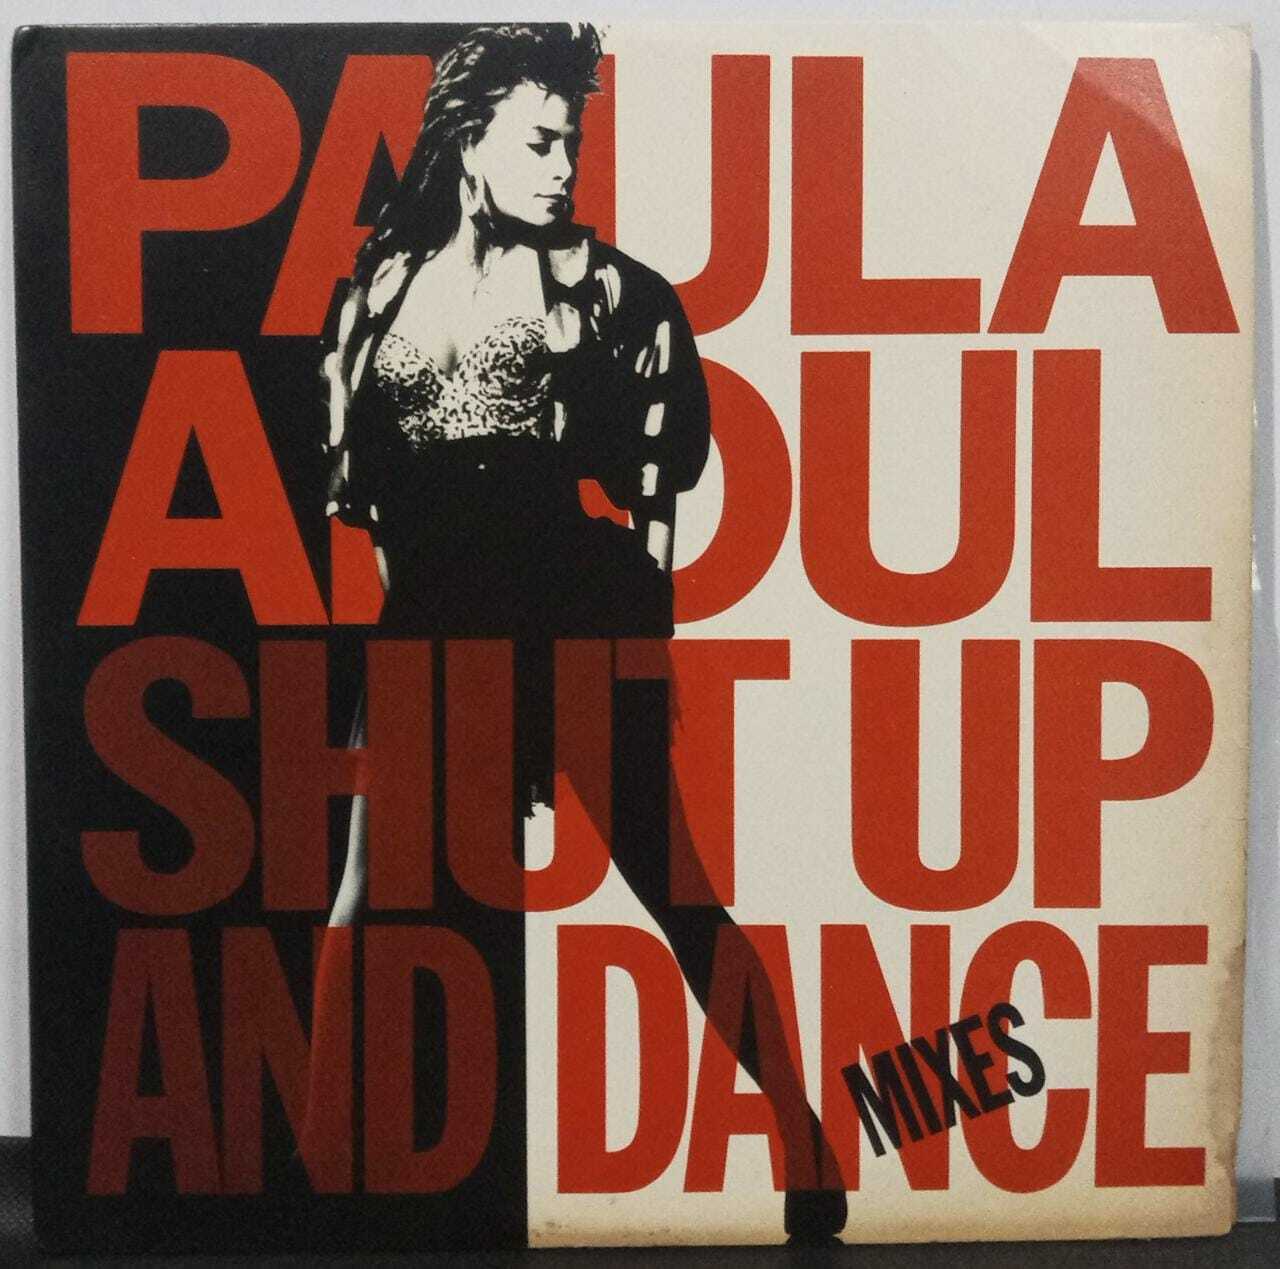 Vinil - Paula Abdul - Shut up and Dance